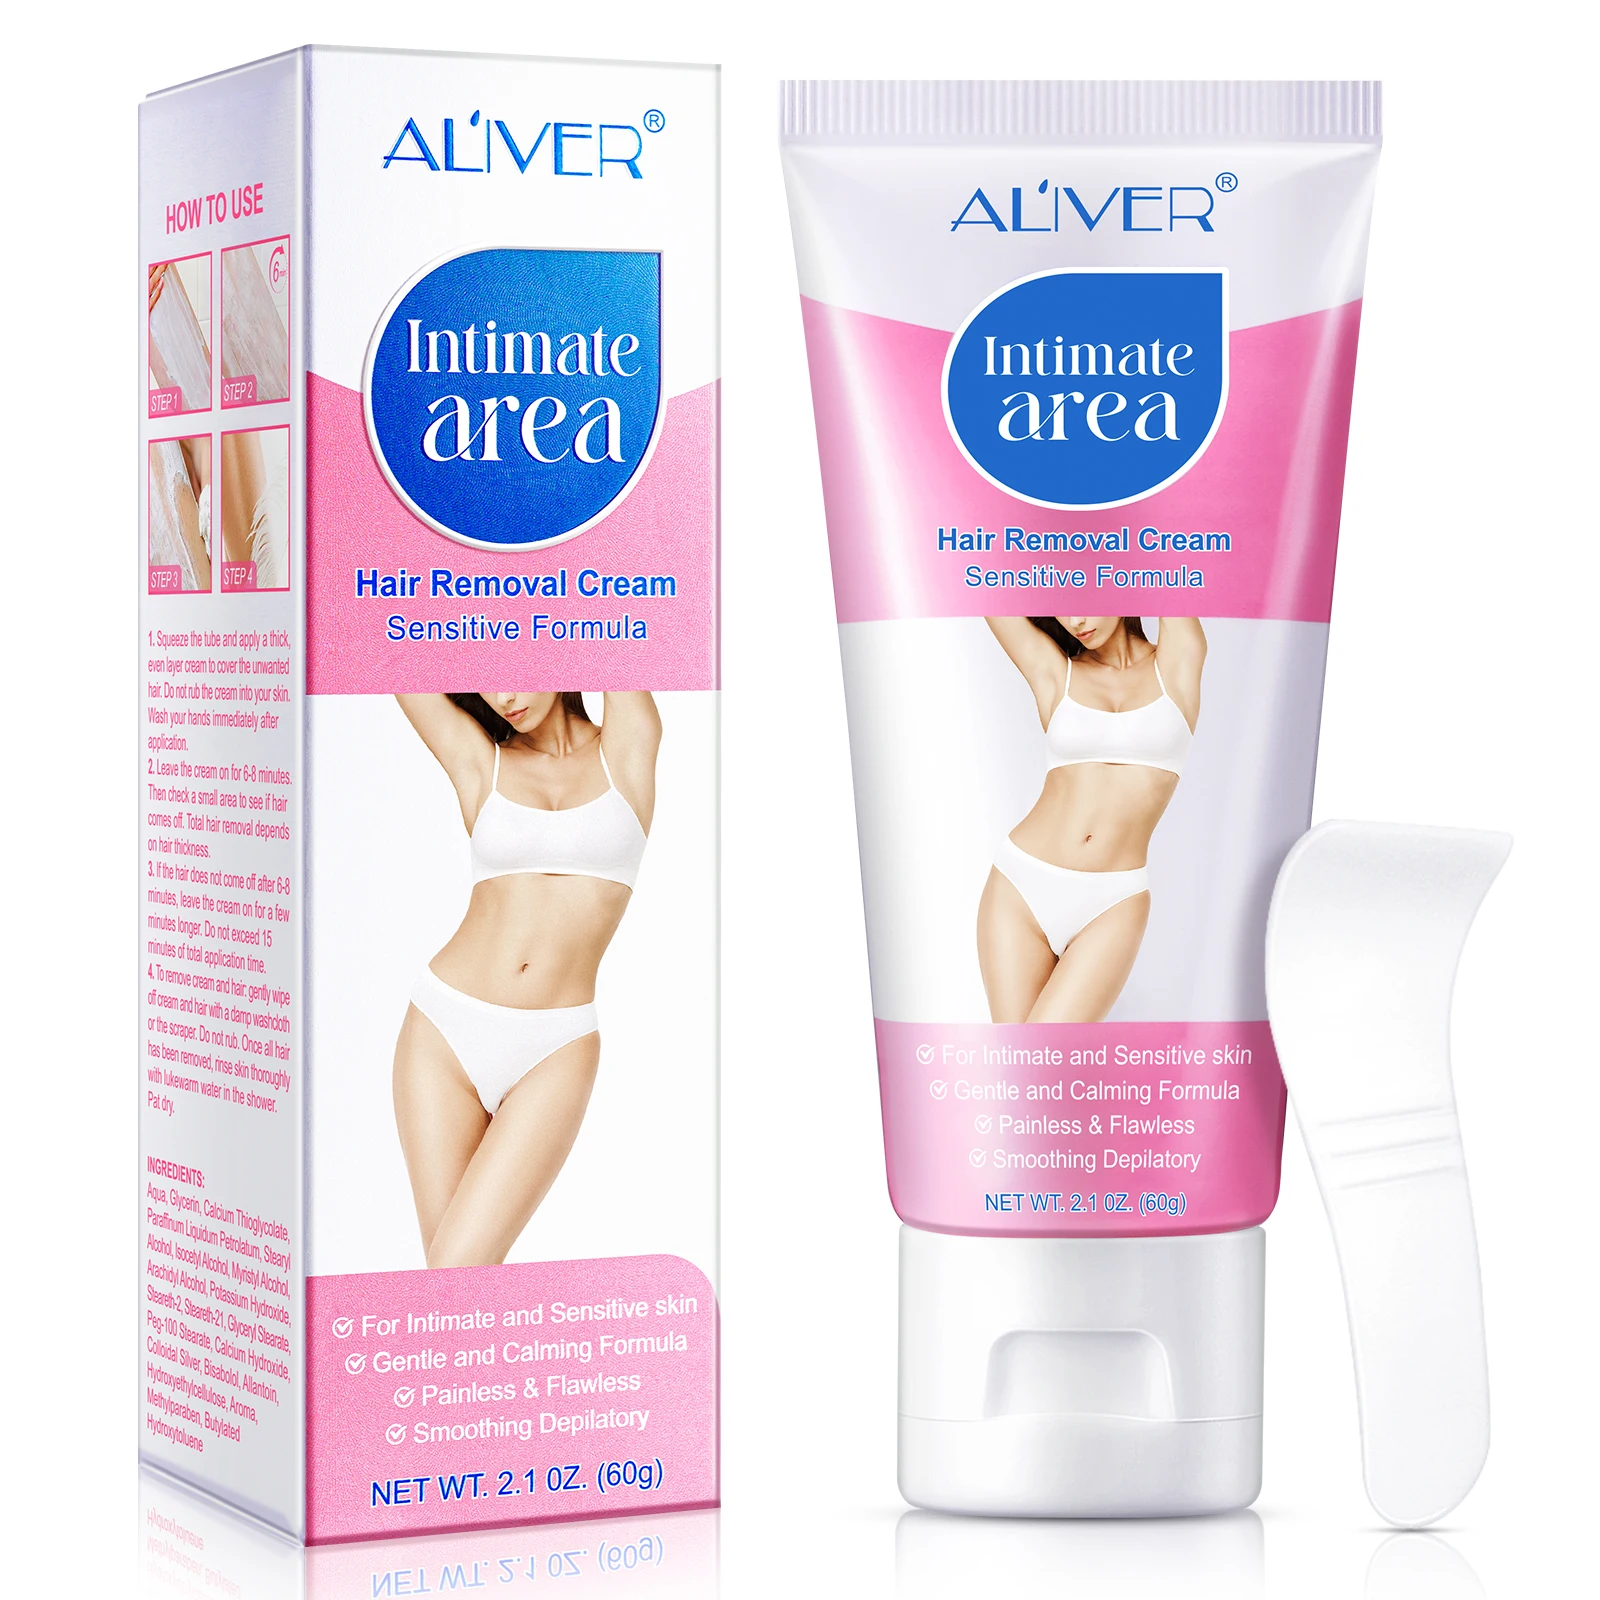 

ALIVER private label shaving cream painless bikini legs body women underarm private part sensitive hair removal cream